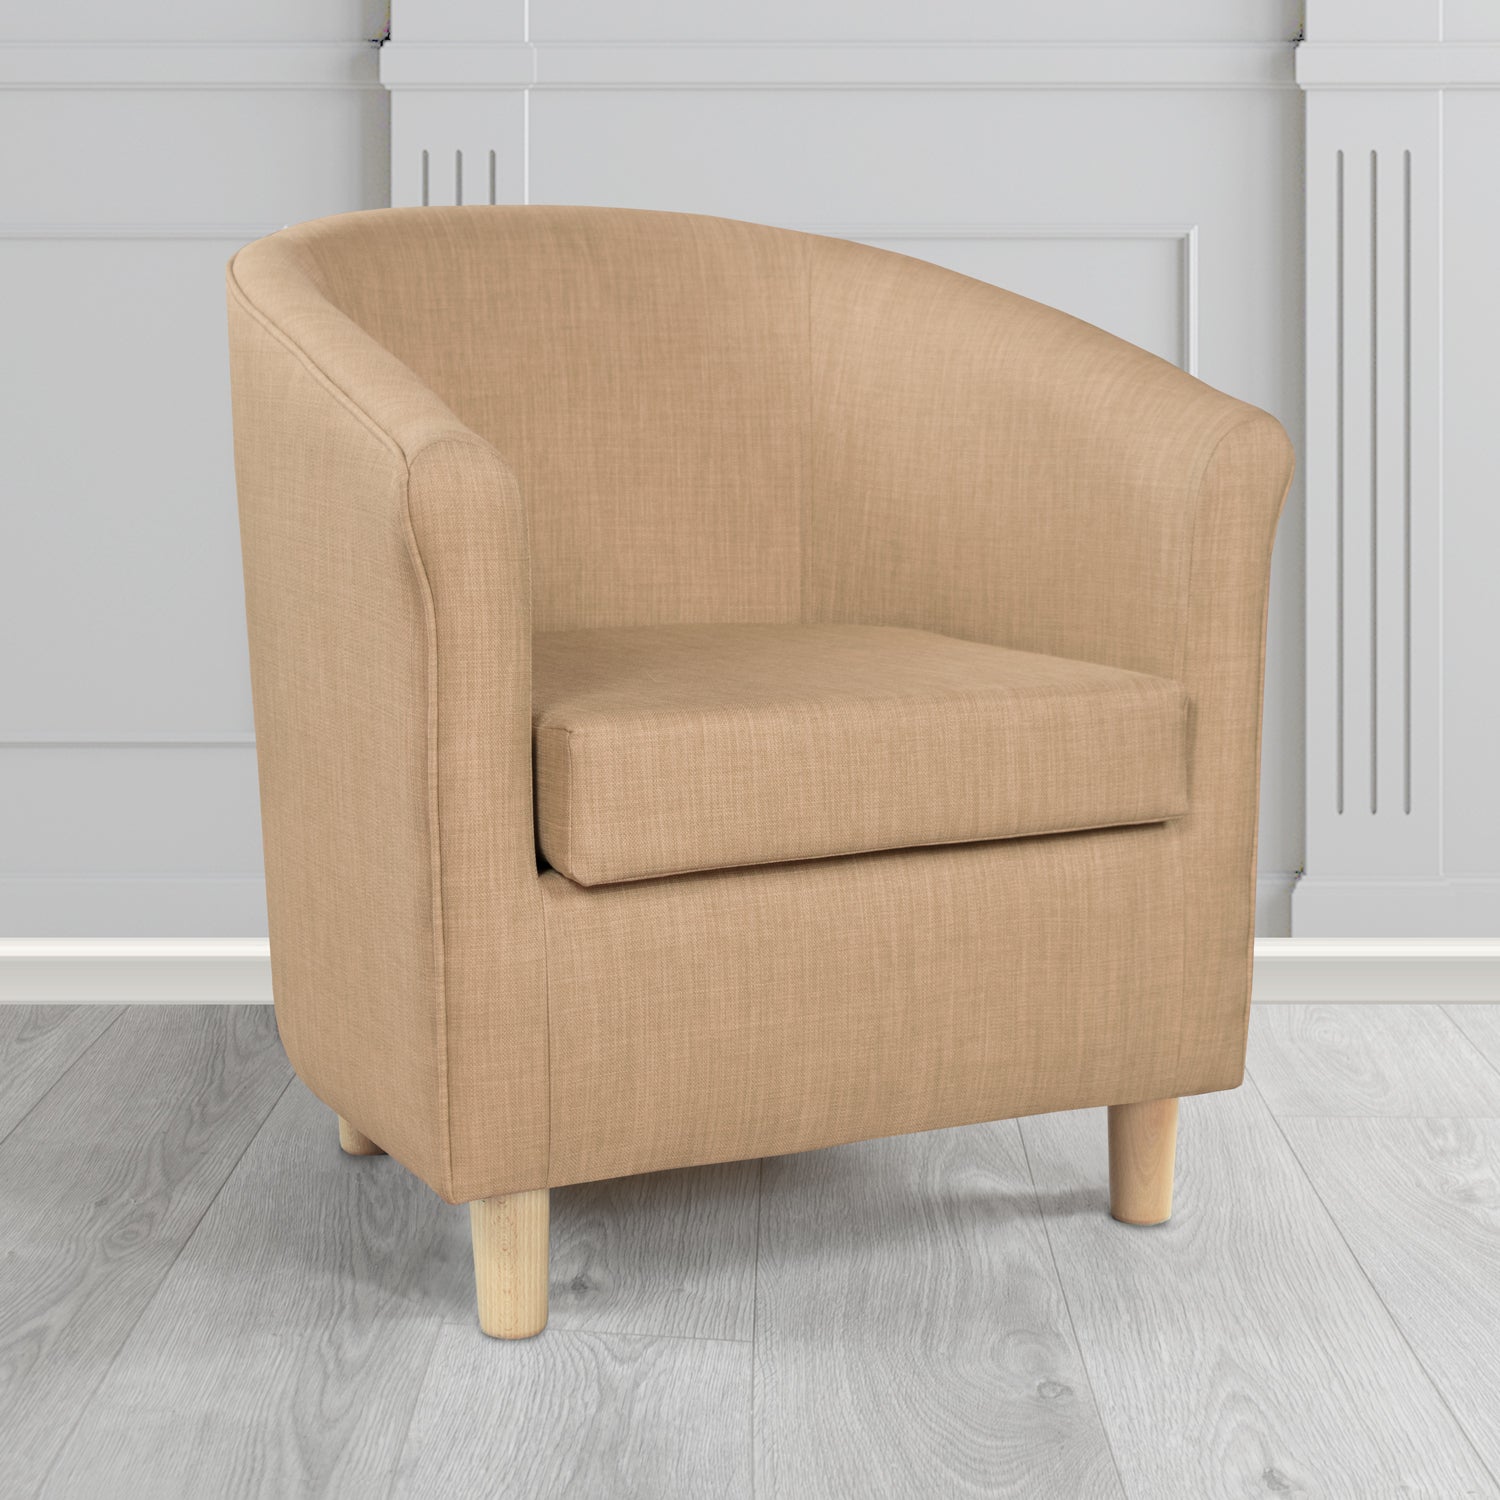 Tuscany Charles Honey Plain Linen Fabric Tub Chair - The Tub Chair Shop